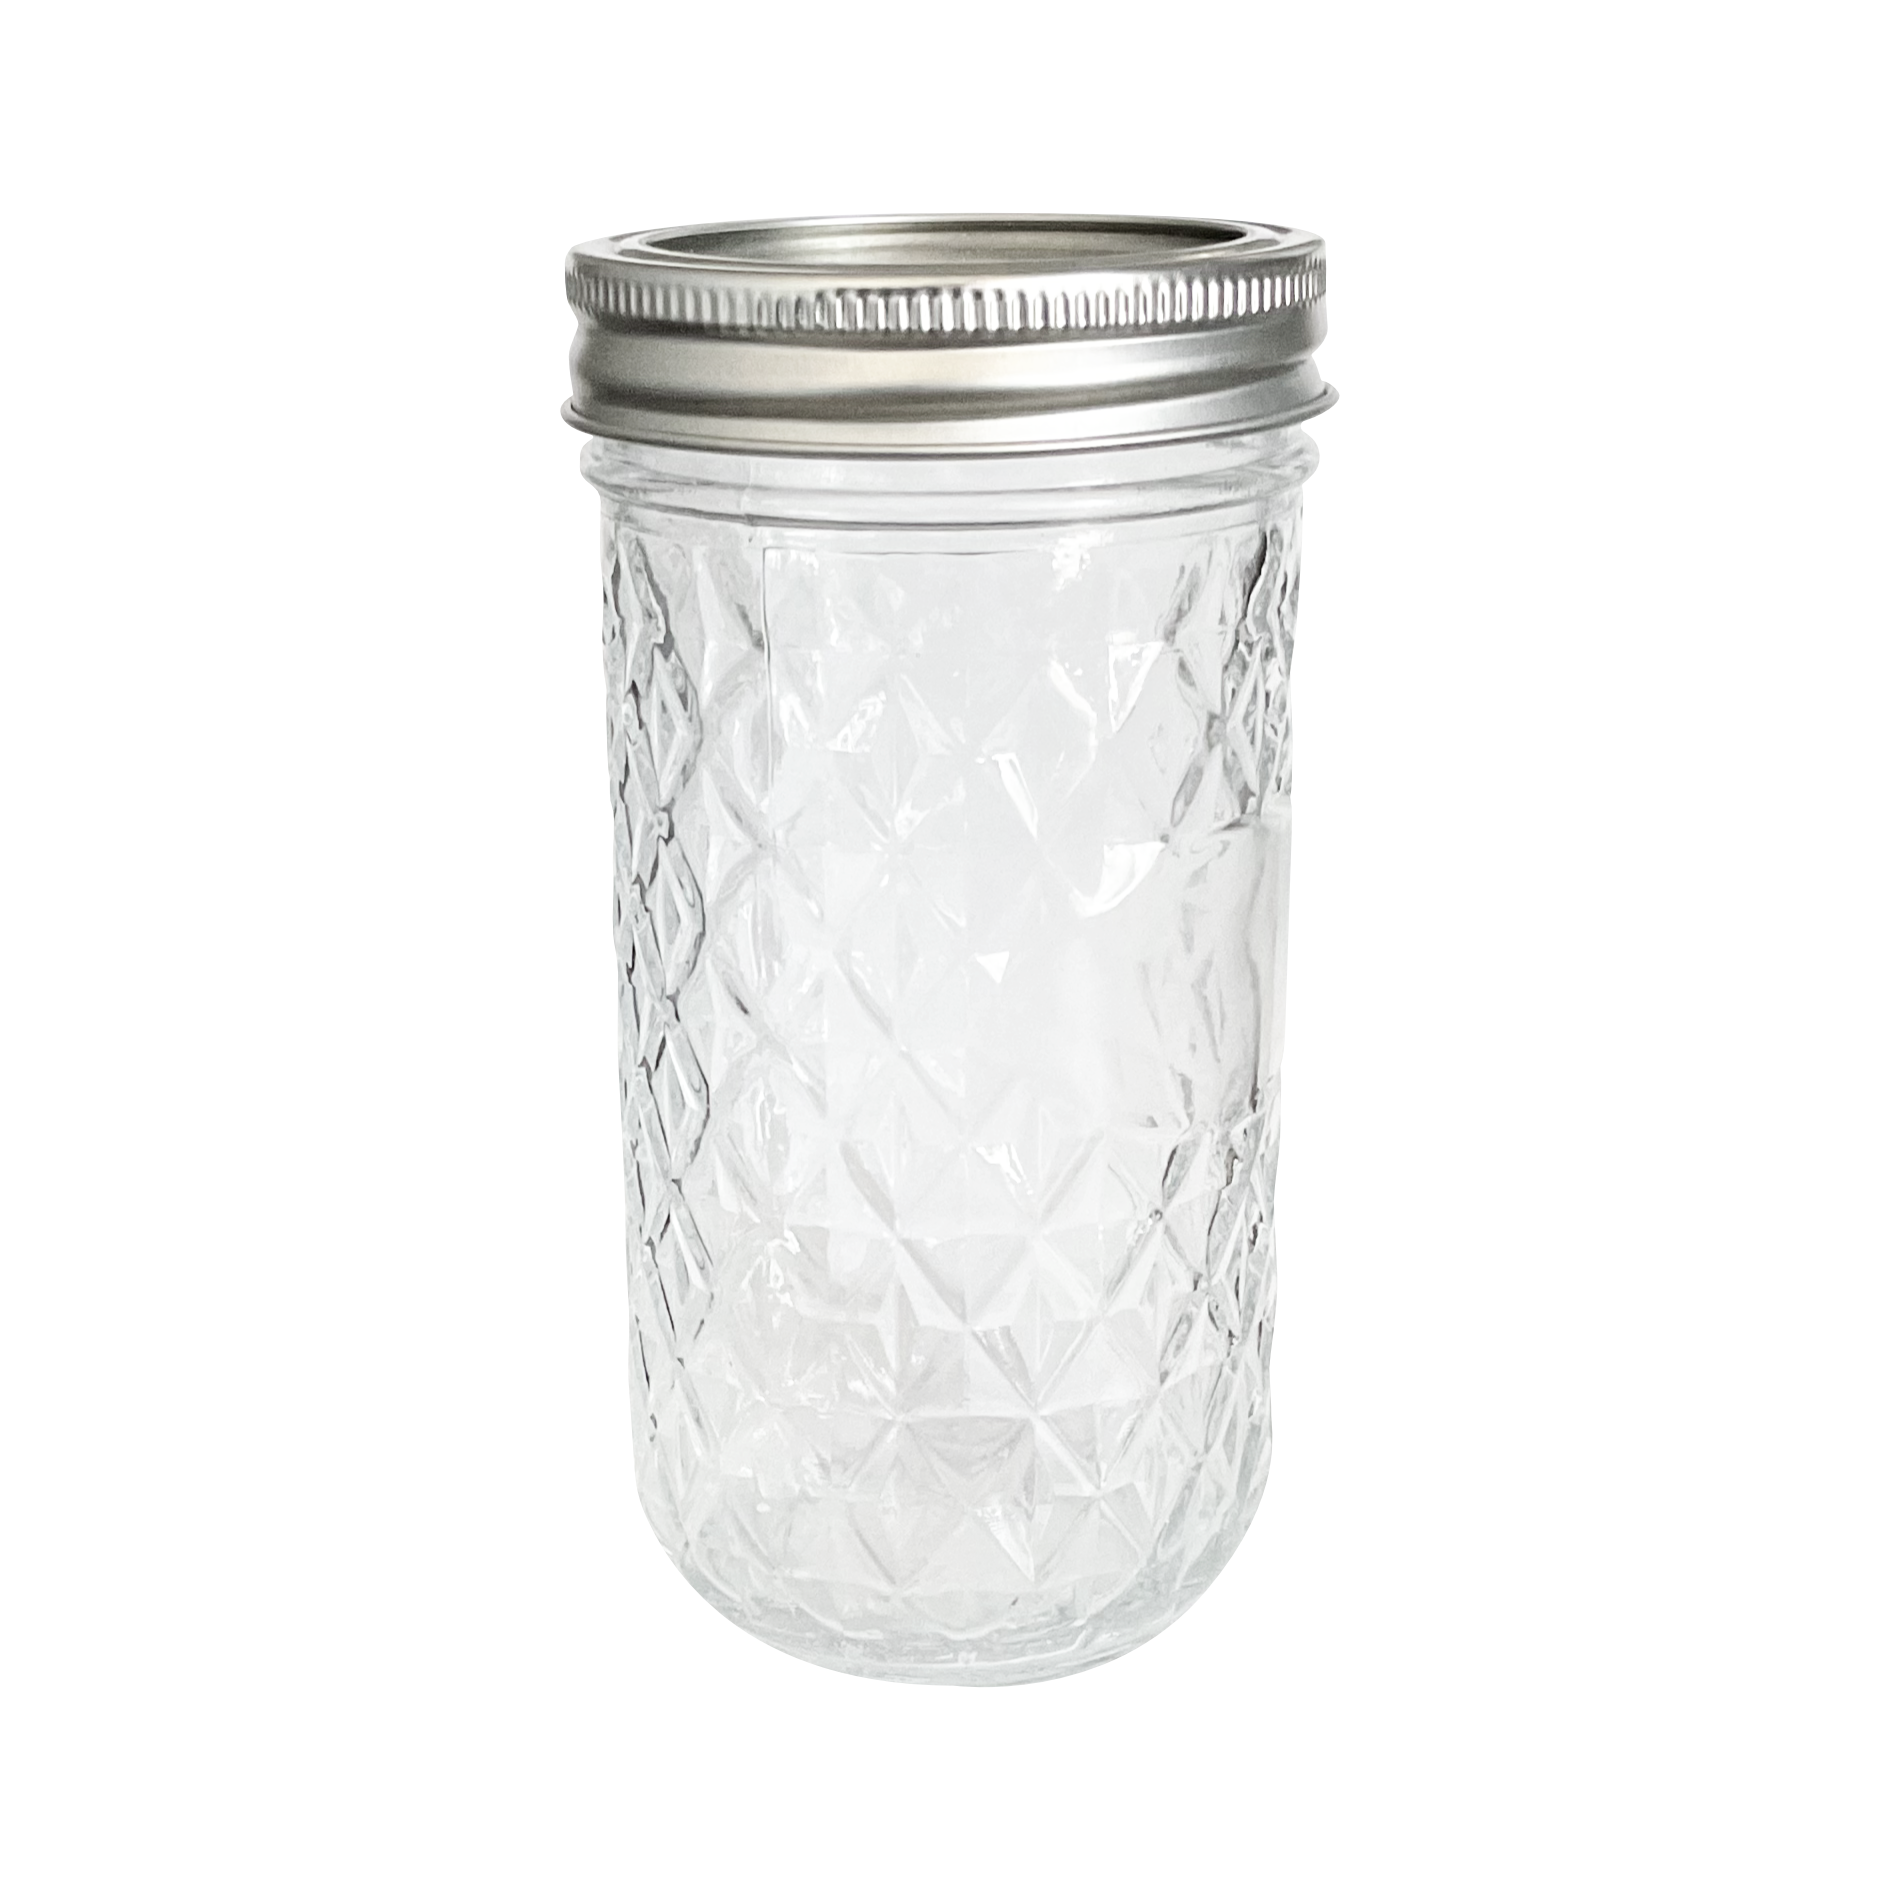 12 Pcs, 12 Oz Mason Glass Jars With Silver Lids 